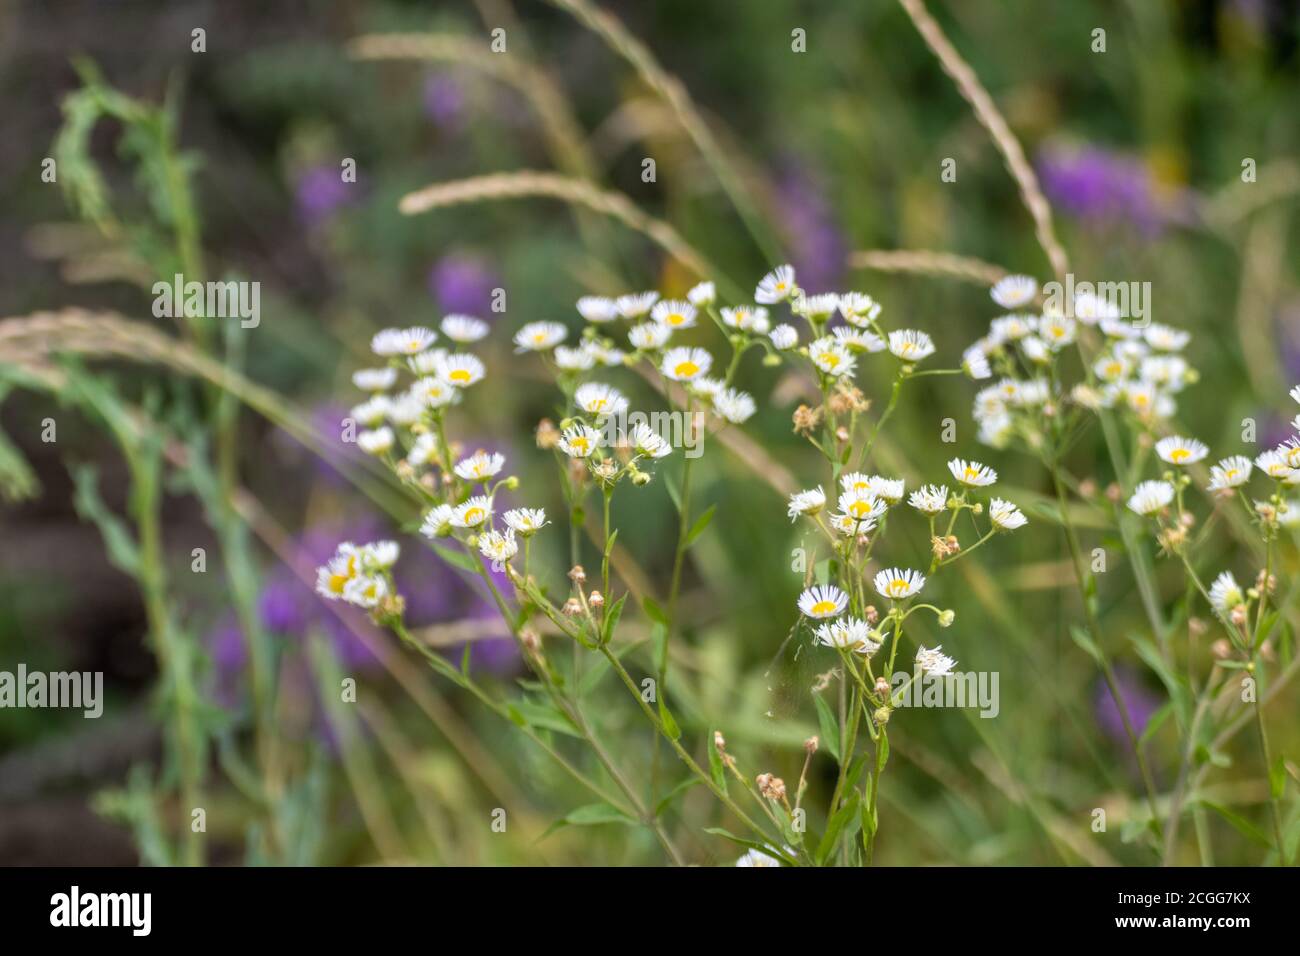 Sweet tiny white wild daisy like flowers in wild natural flowers field in green, yellow and purple flowers around environment. Erigeron strigosus Stock Photo